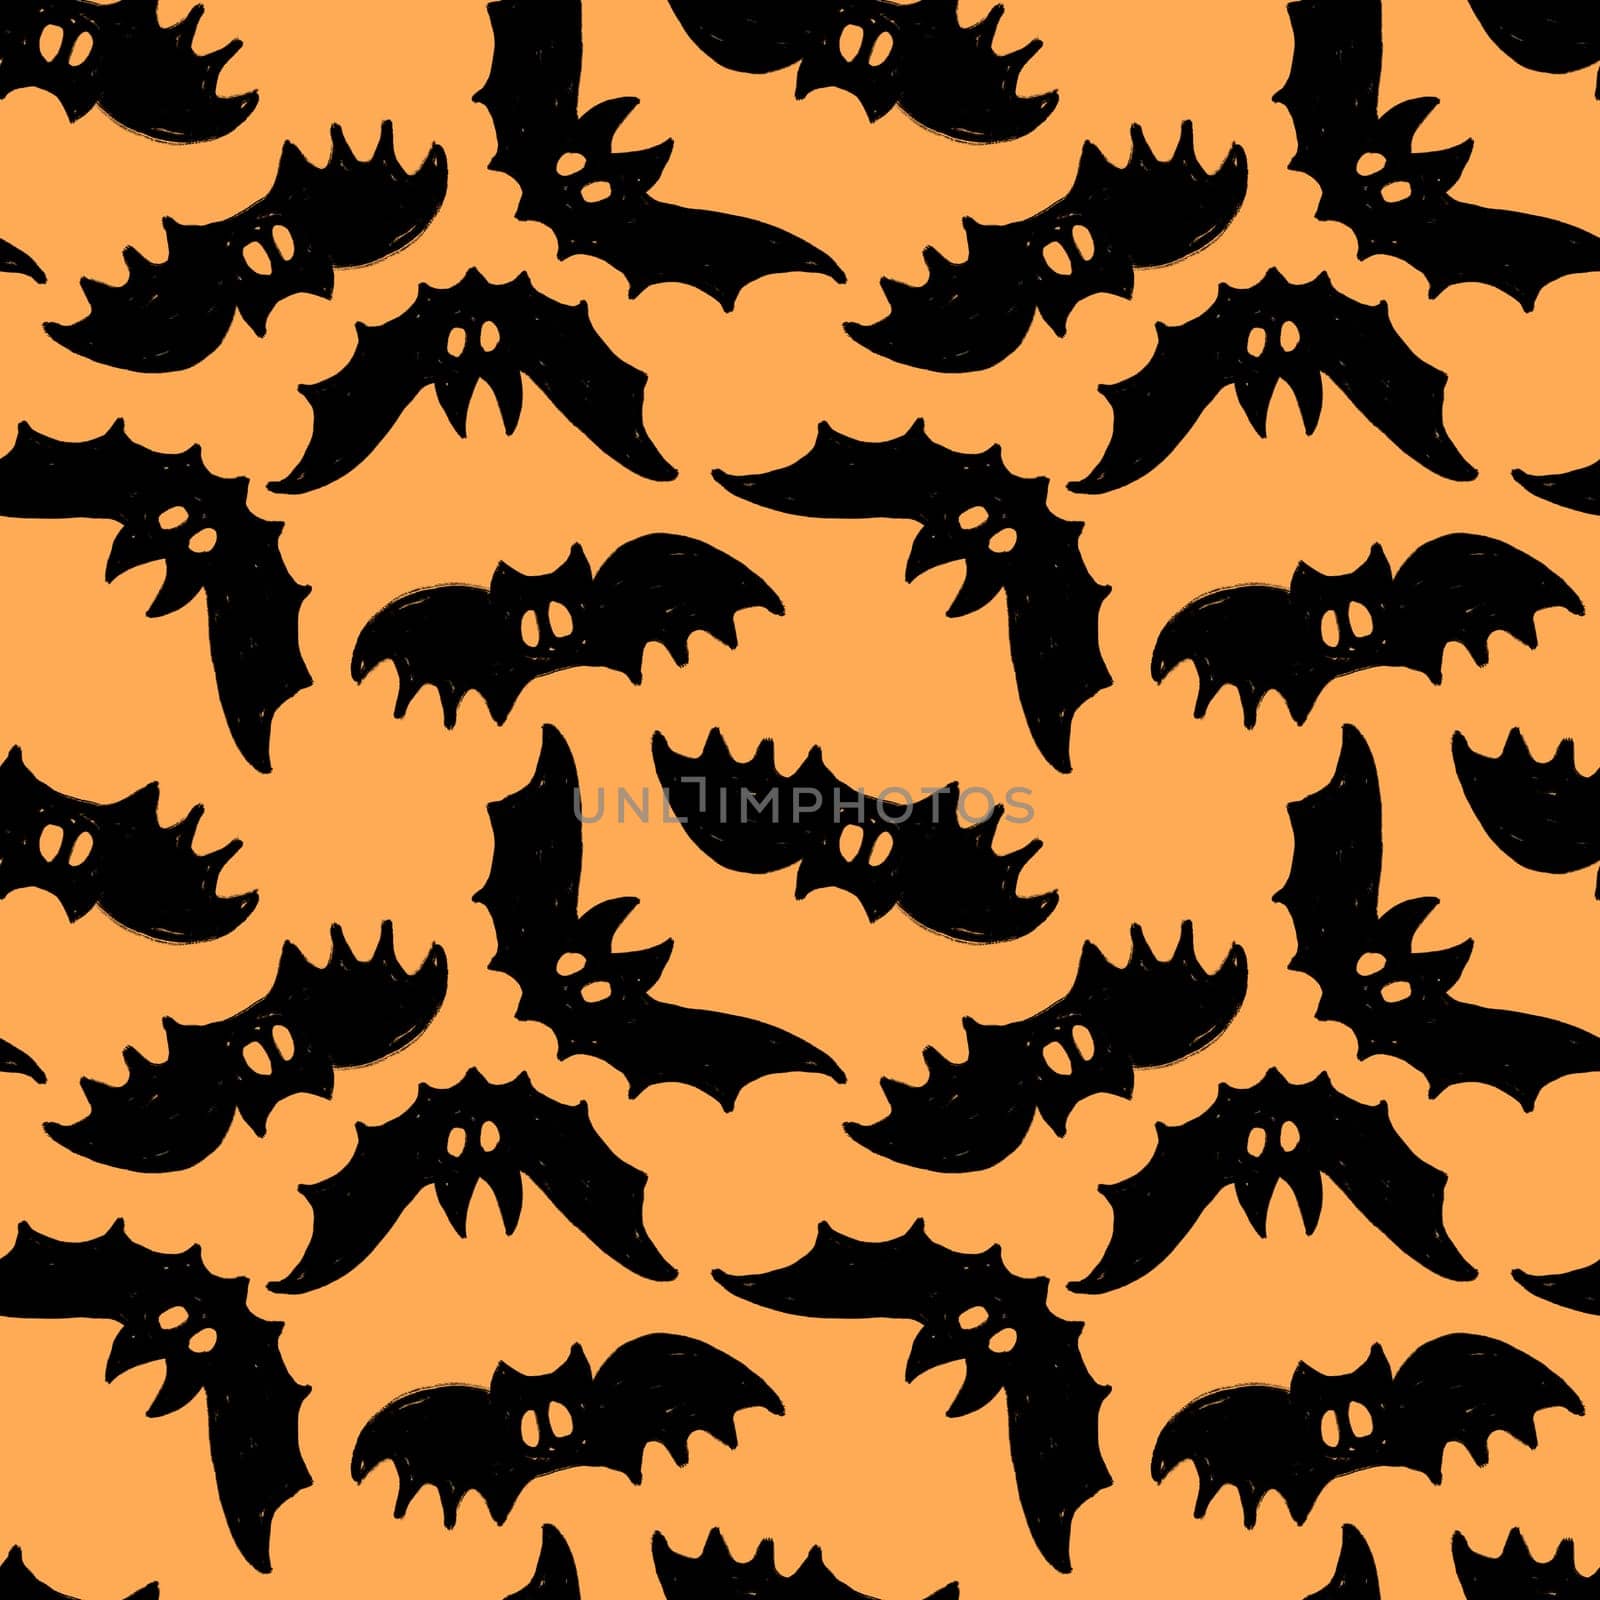 Hand drawn seamless pattern with black Halloween bats on orange background. Fall autumn scary spooky horror print, flying vampires season art. by Lagmar